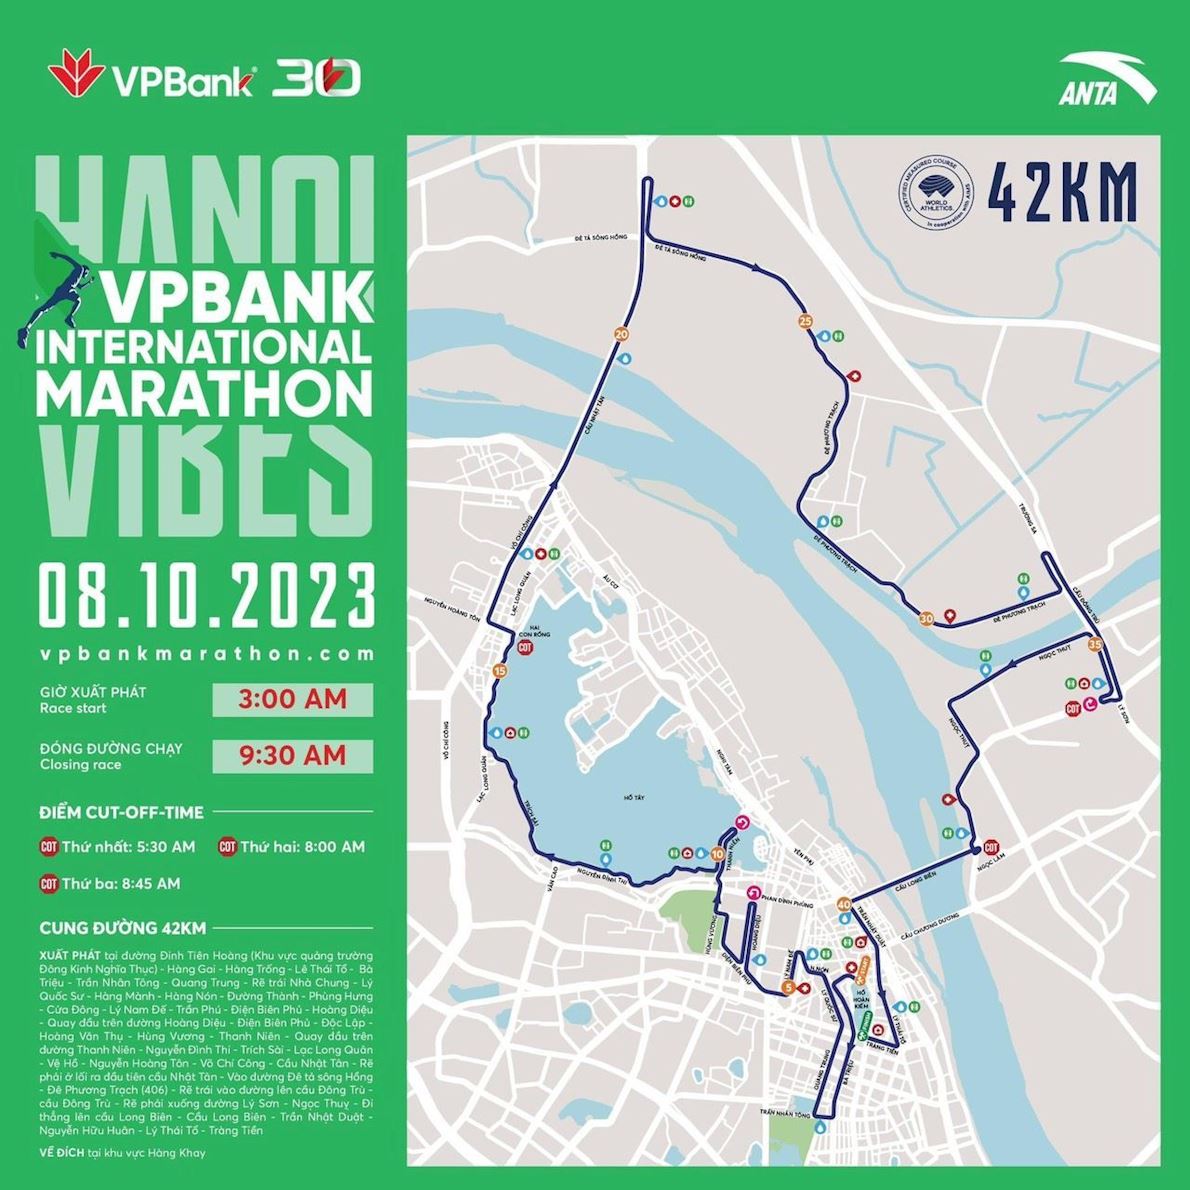 VPBank Hanoi International Marathon Routenkarte